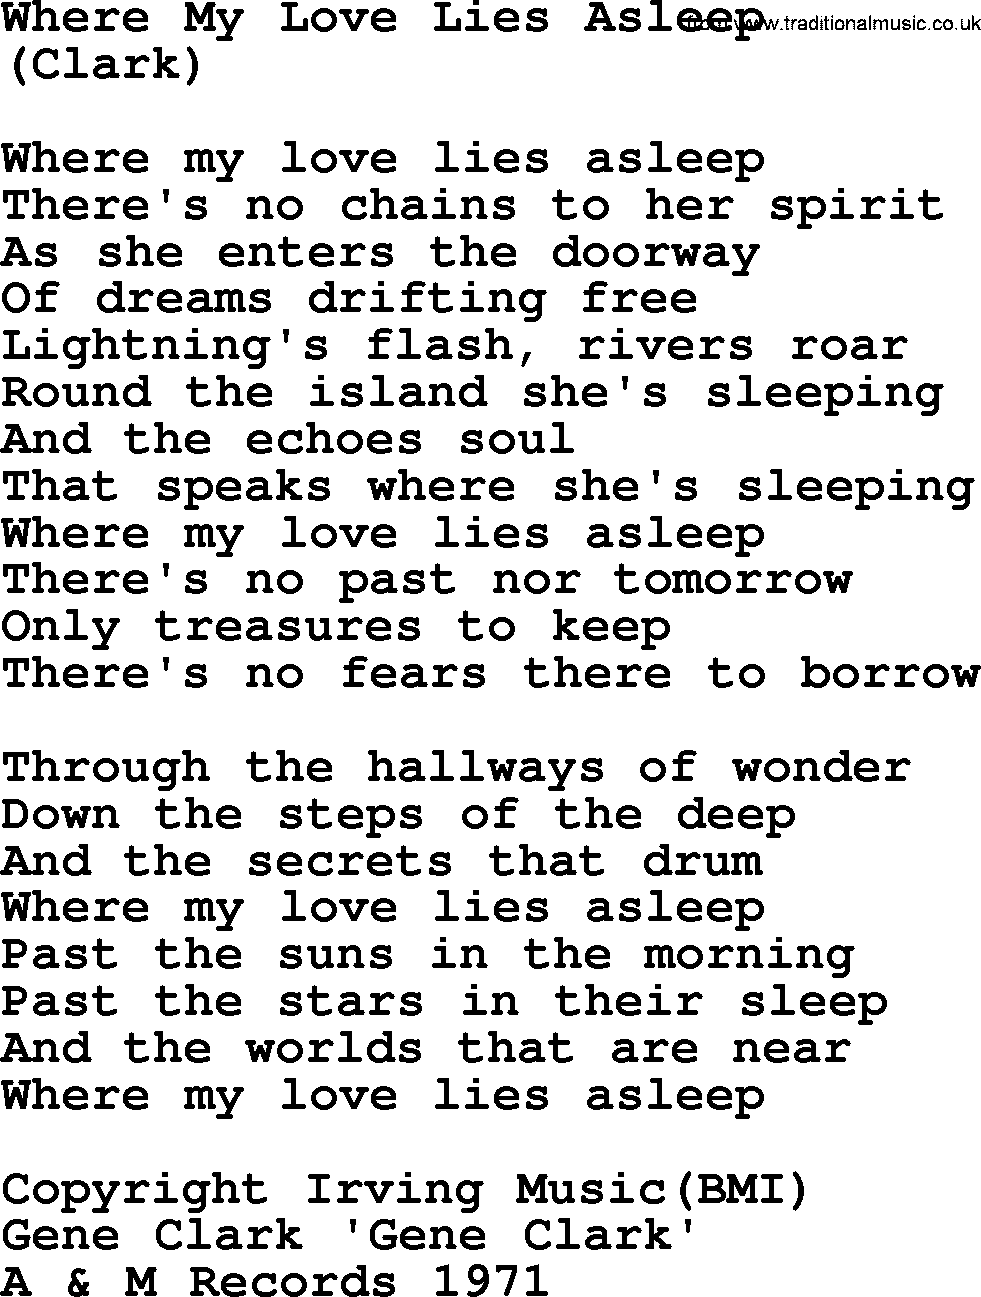 The Byrds song Where My Love Lies Asleep, lyrics